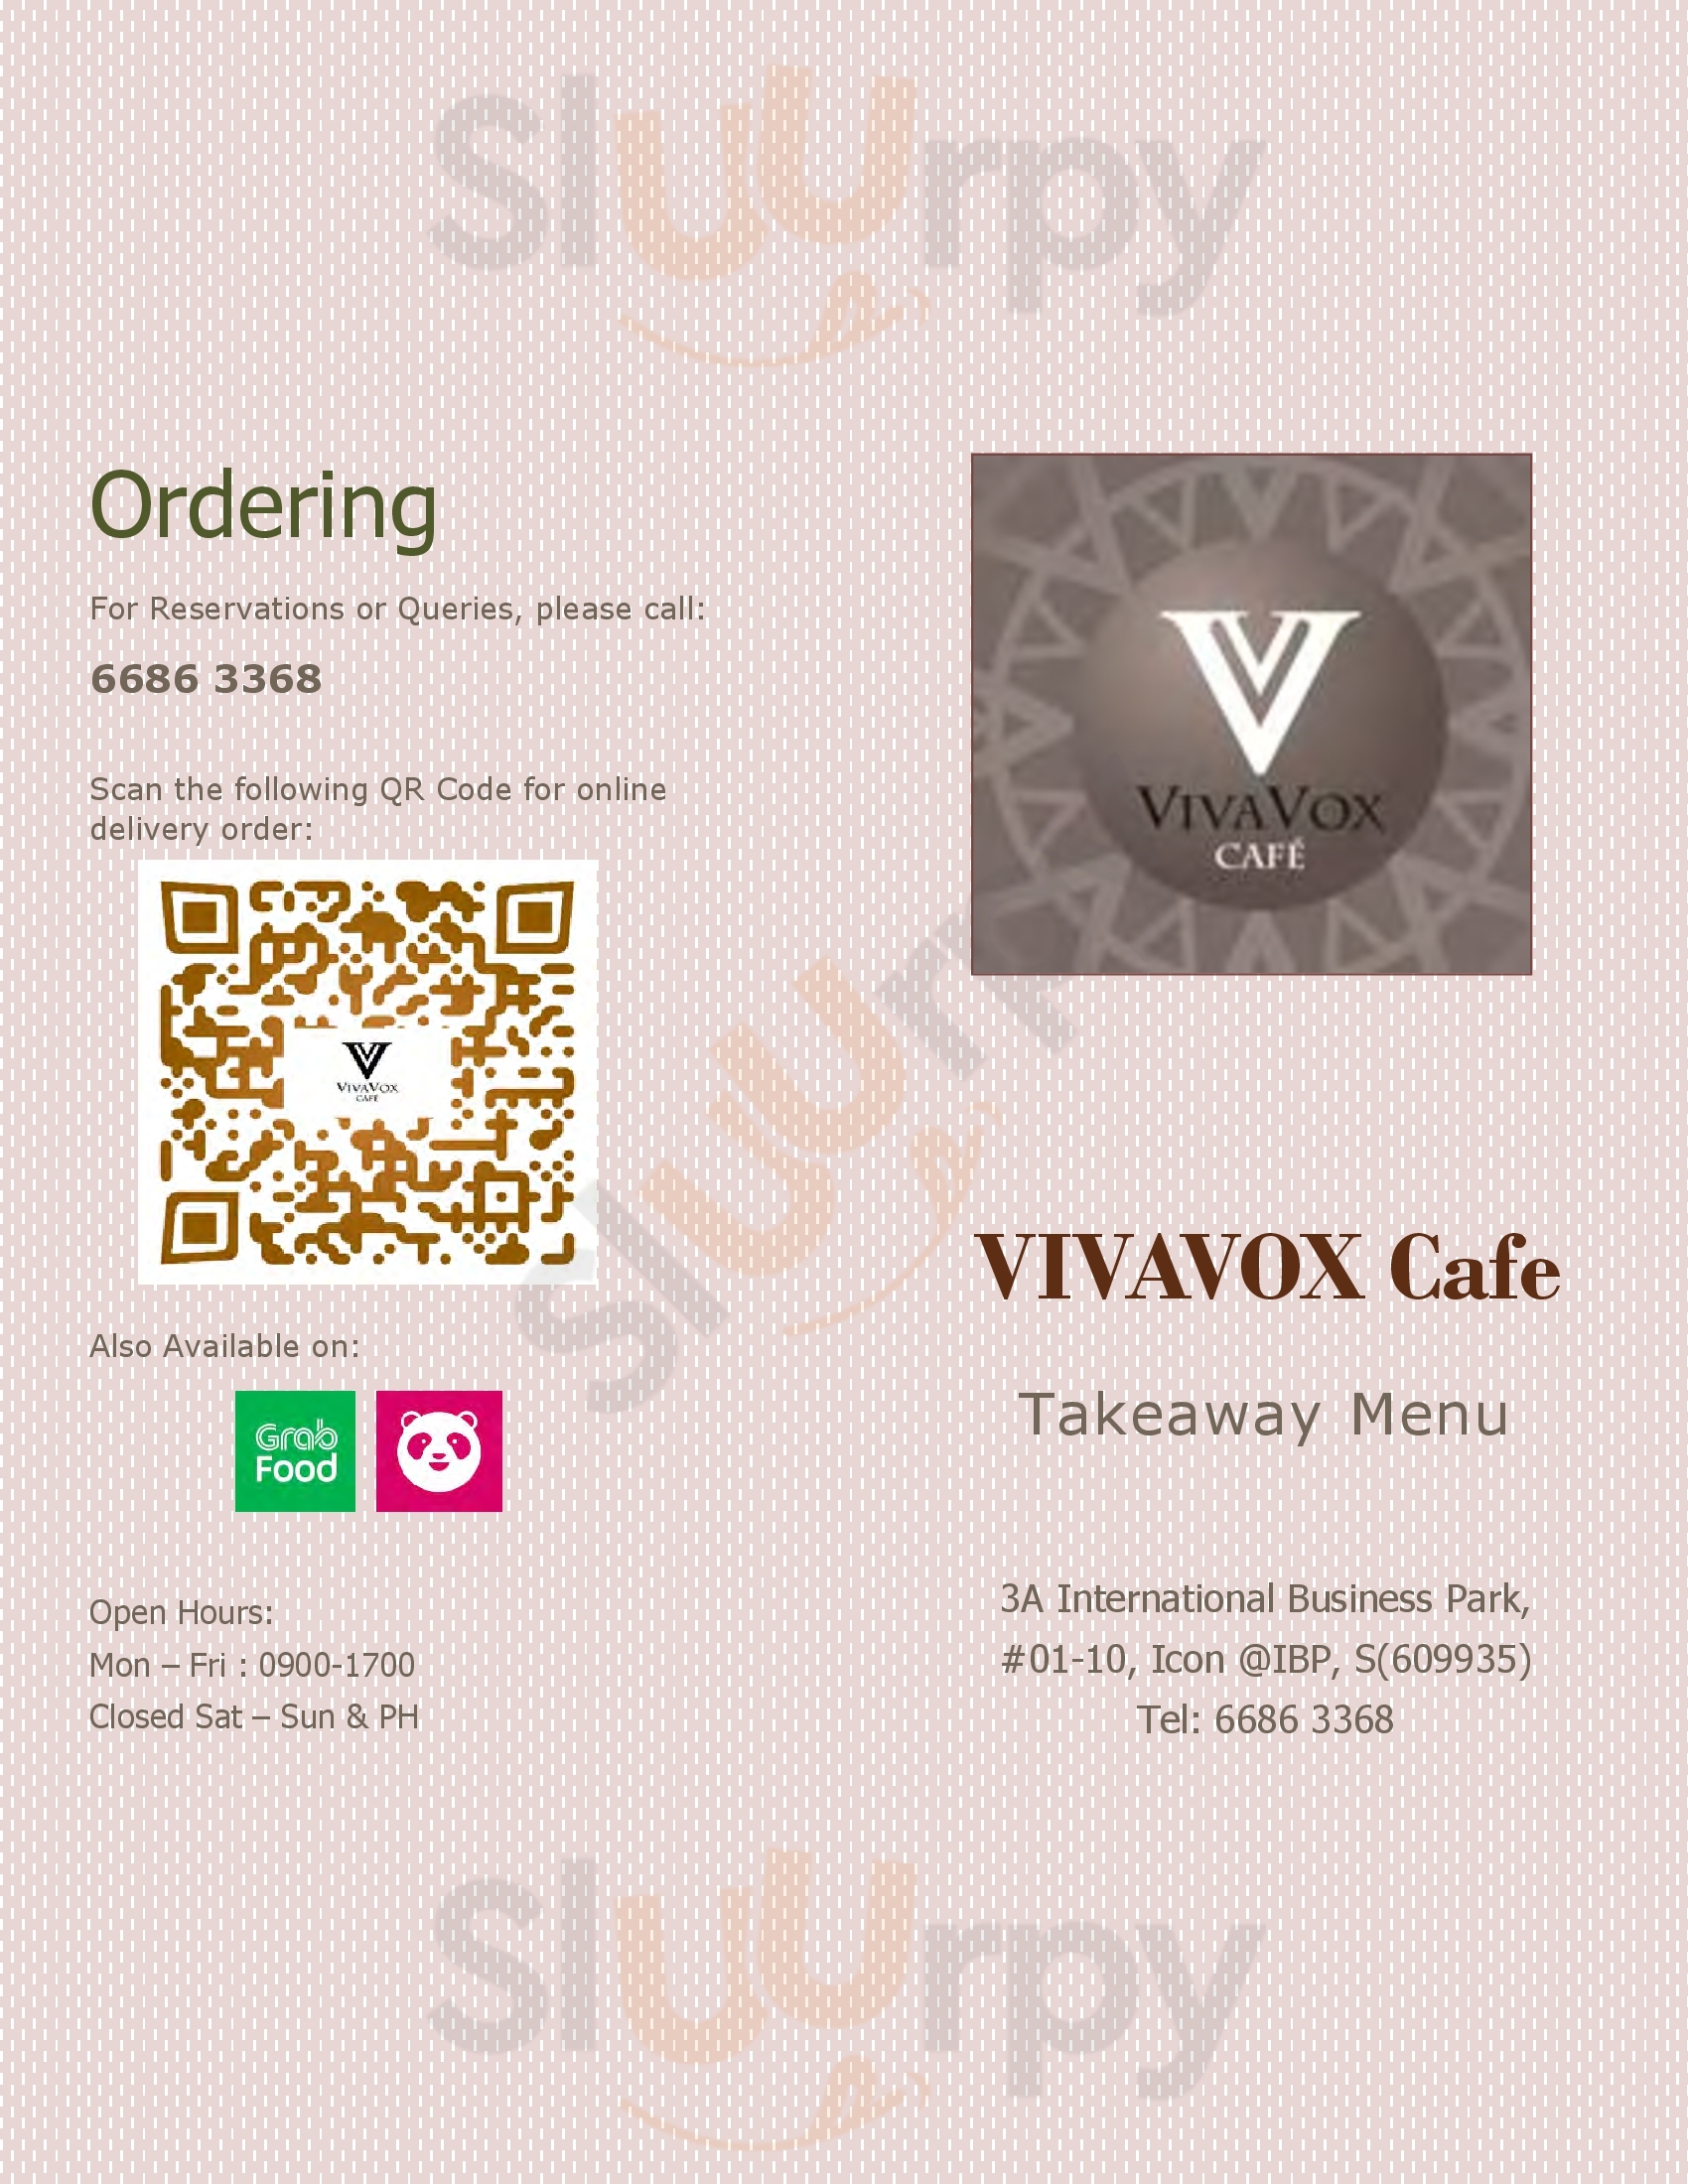 Vivavox Cafe Singapore Menu - 1